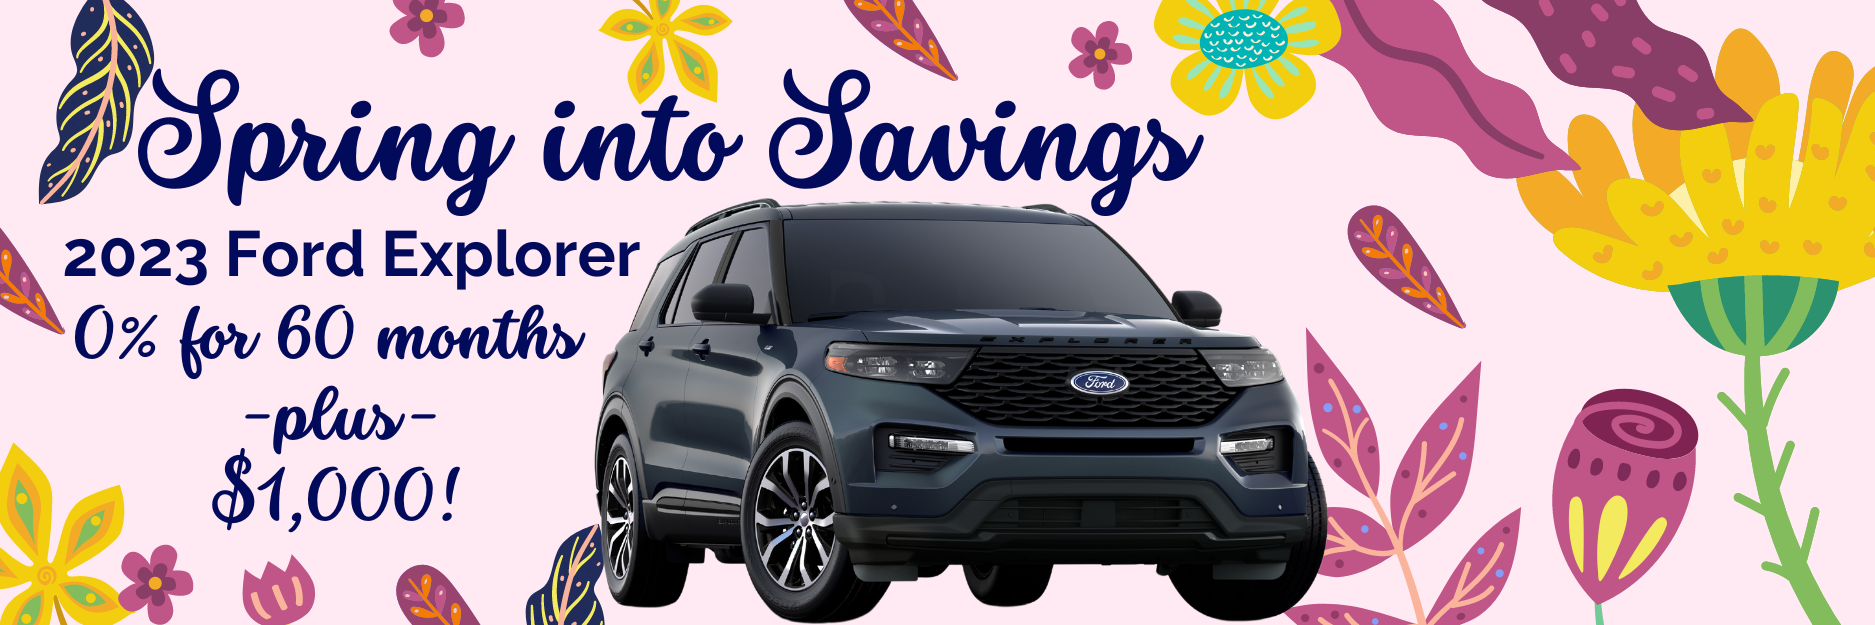 Spring into Savings 2023 Ford Explorer 0% for 60 mo + $1,000